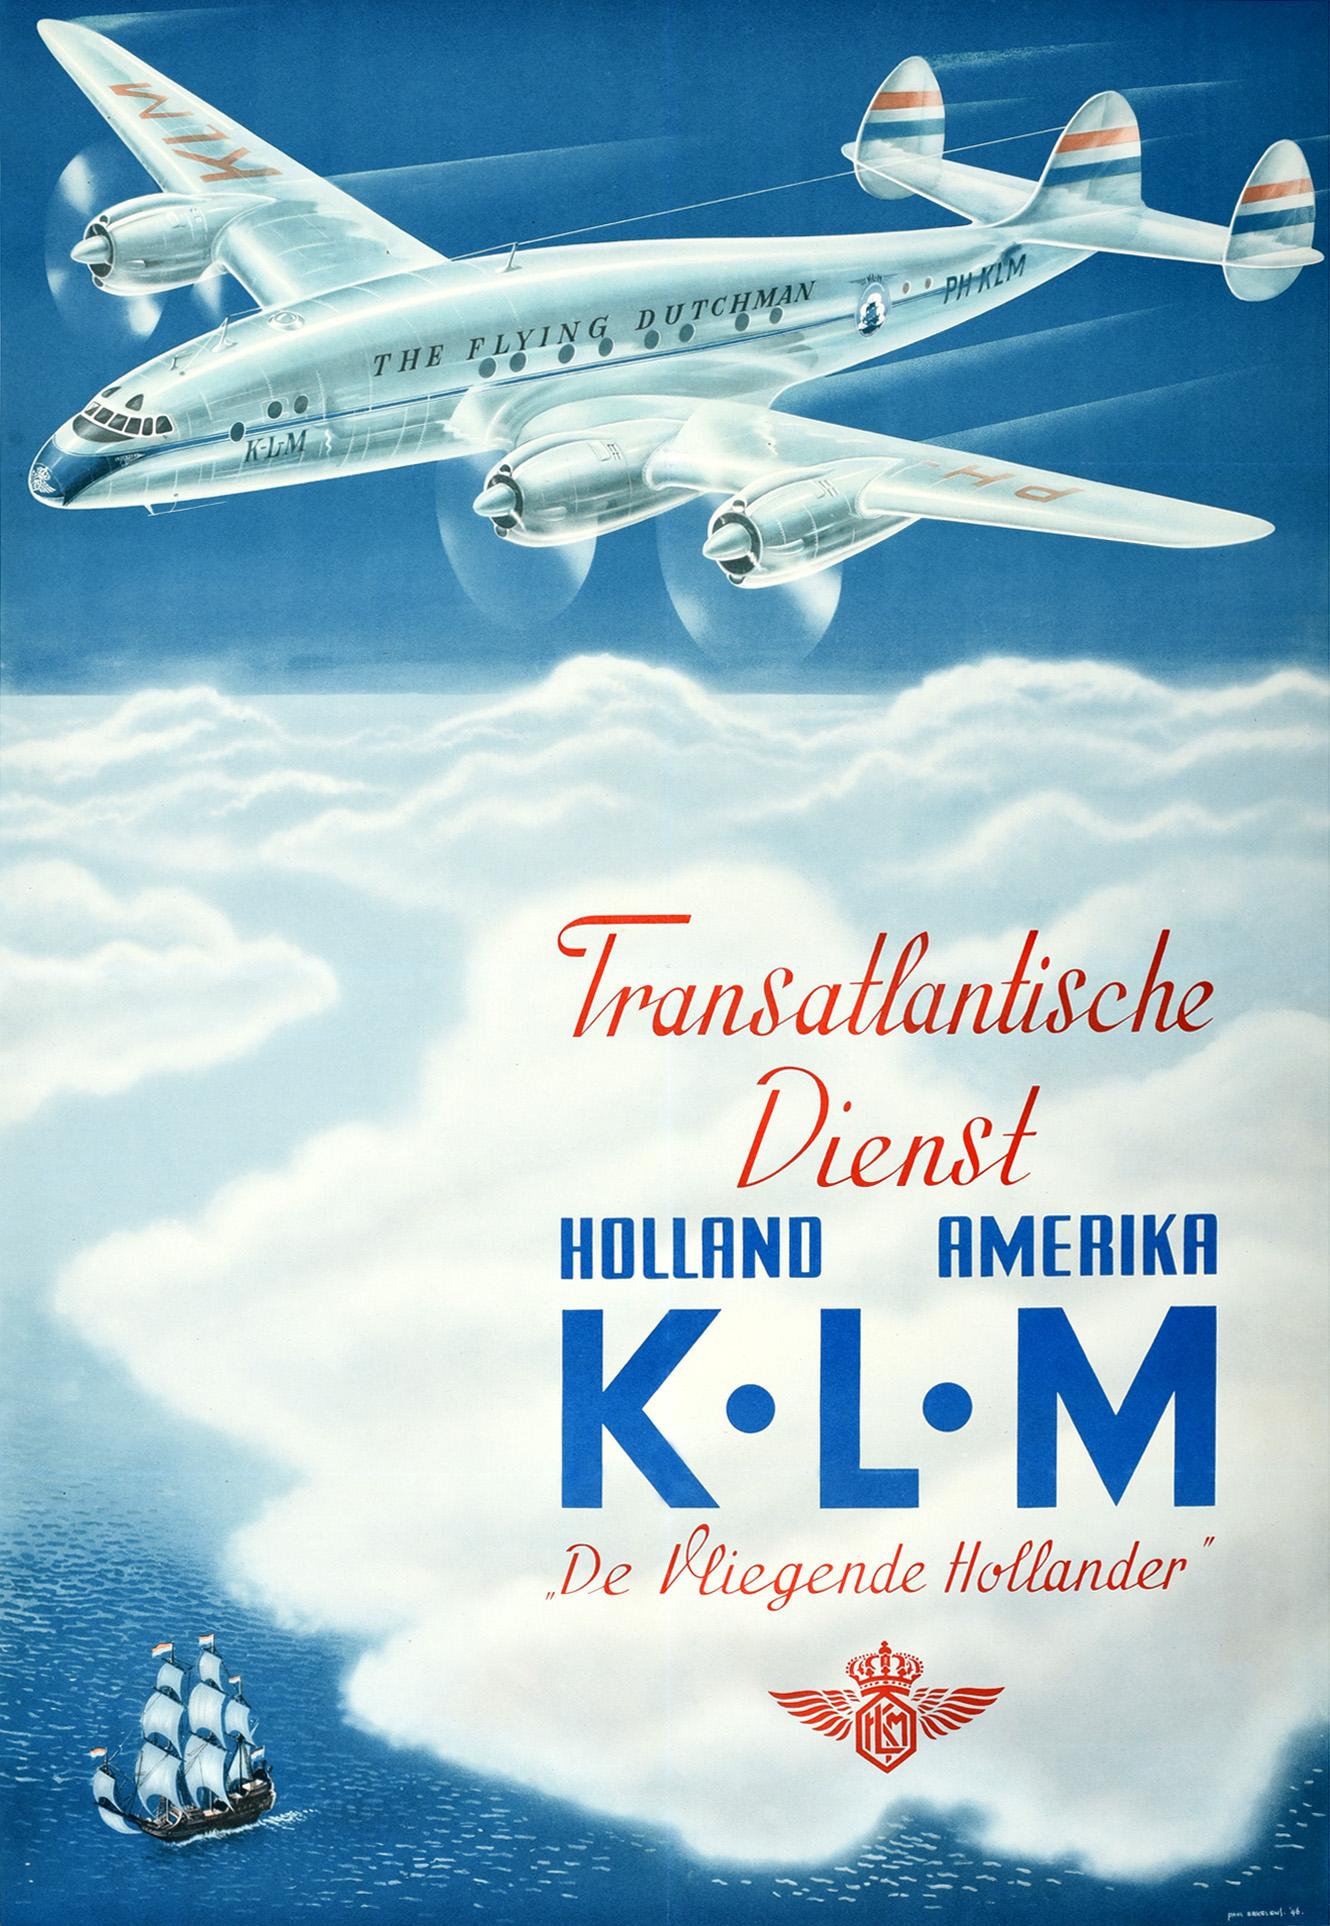 Paul C. Erkelens Print - Original Vintage Poster Transatlantic KLM Flying Dutchman De Vliegende Hollander